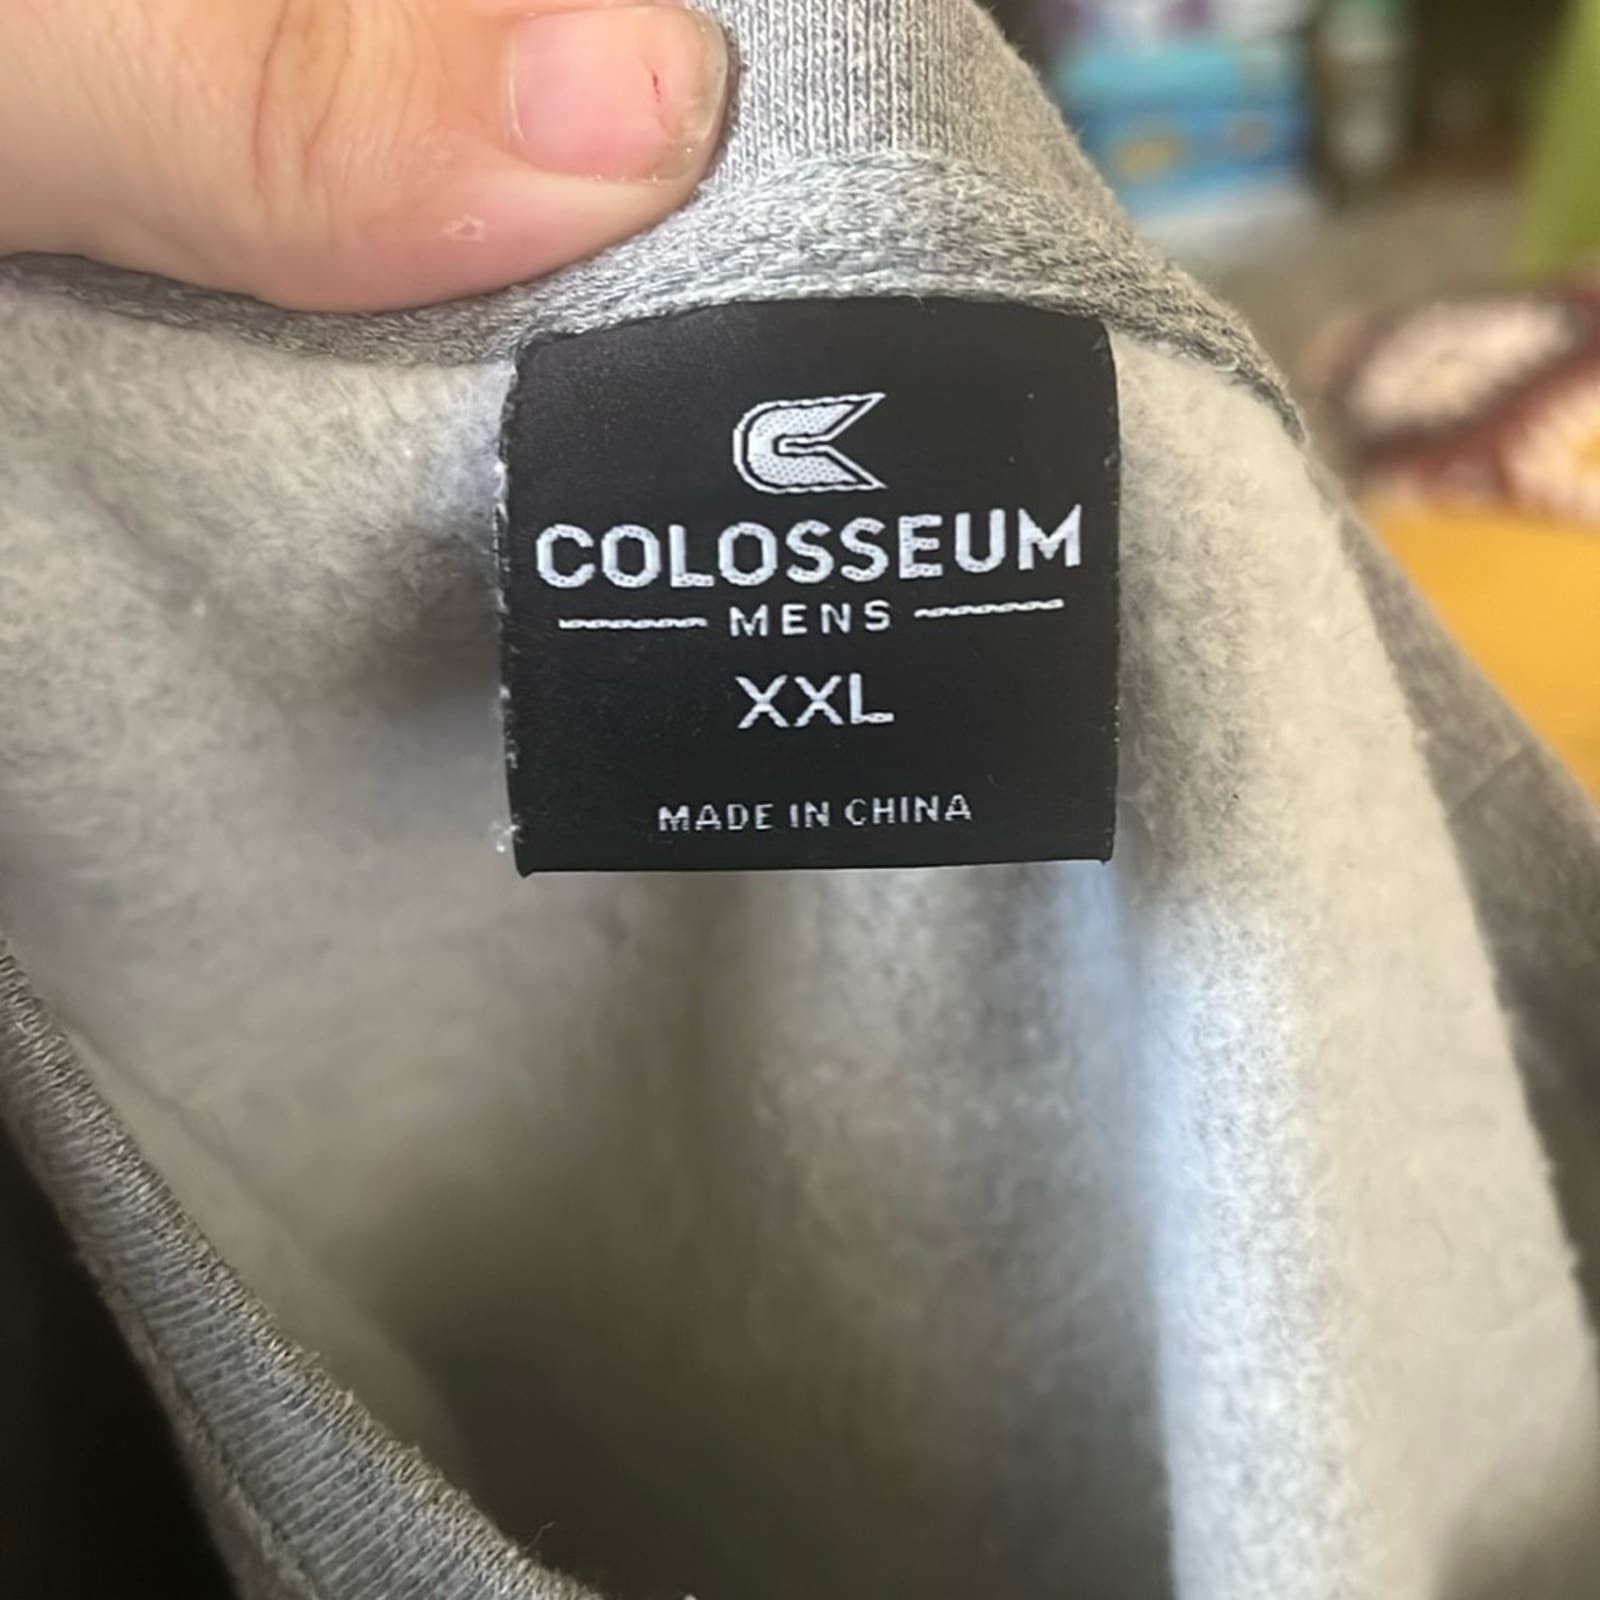 Colosseum Athletics NORTHWESTERN Colosseum crewneck sweatshirt XXL Size US XXL / EU 58 / 5 - 2 Preview